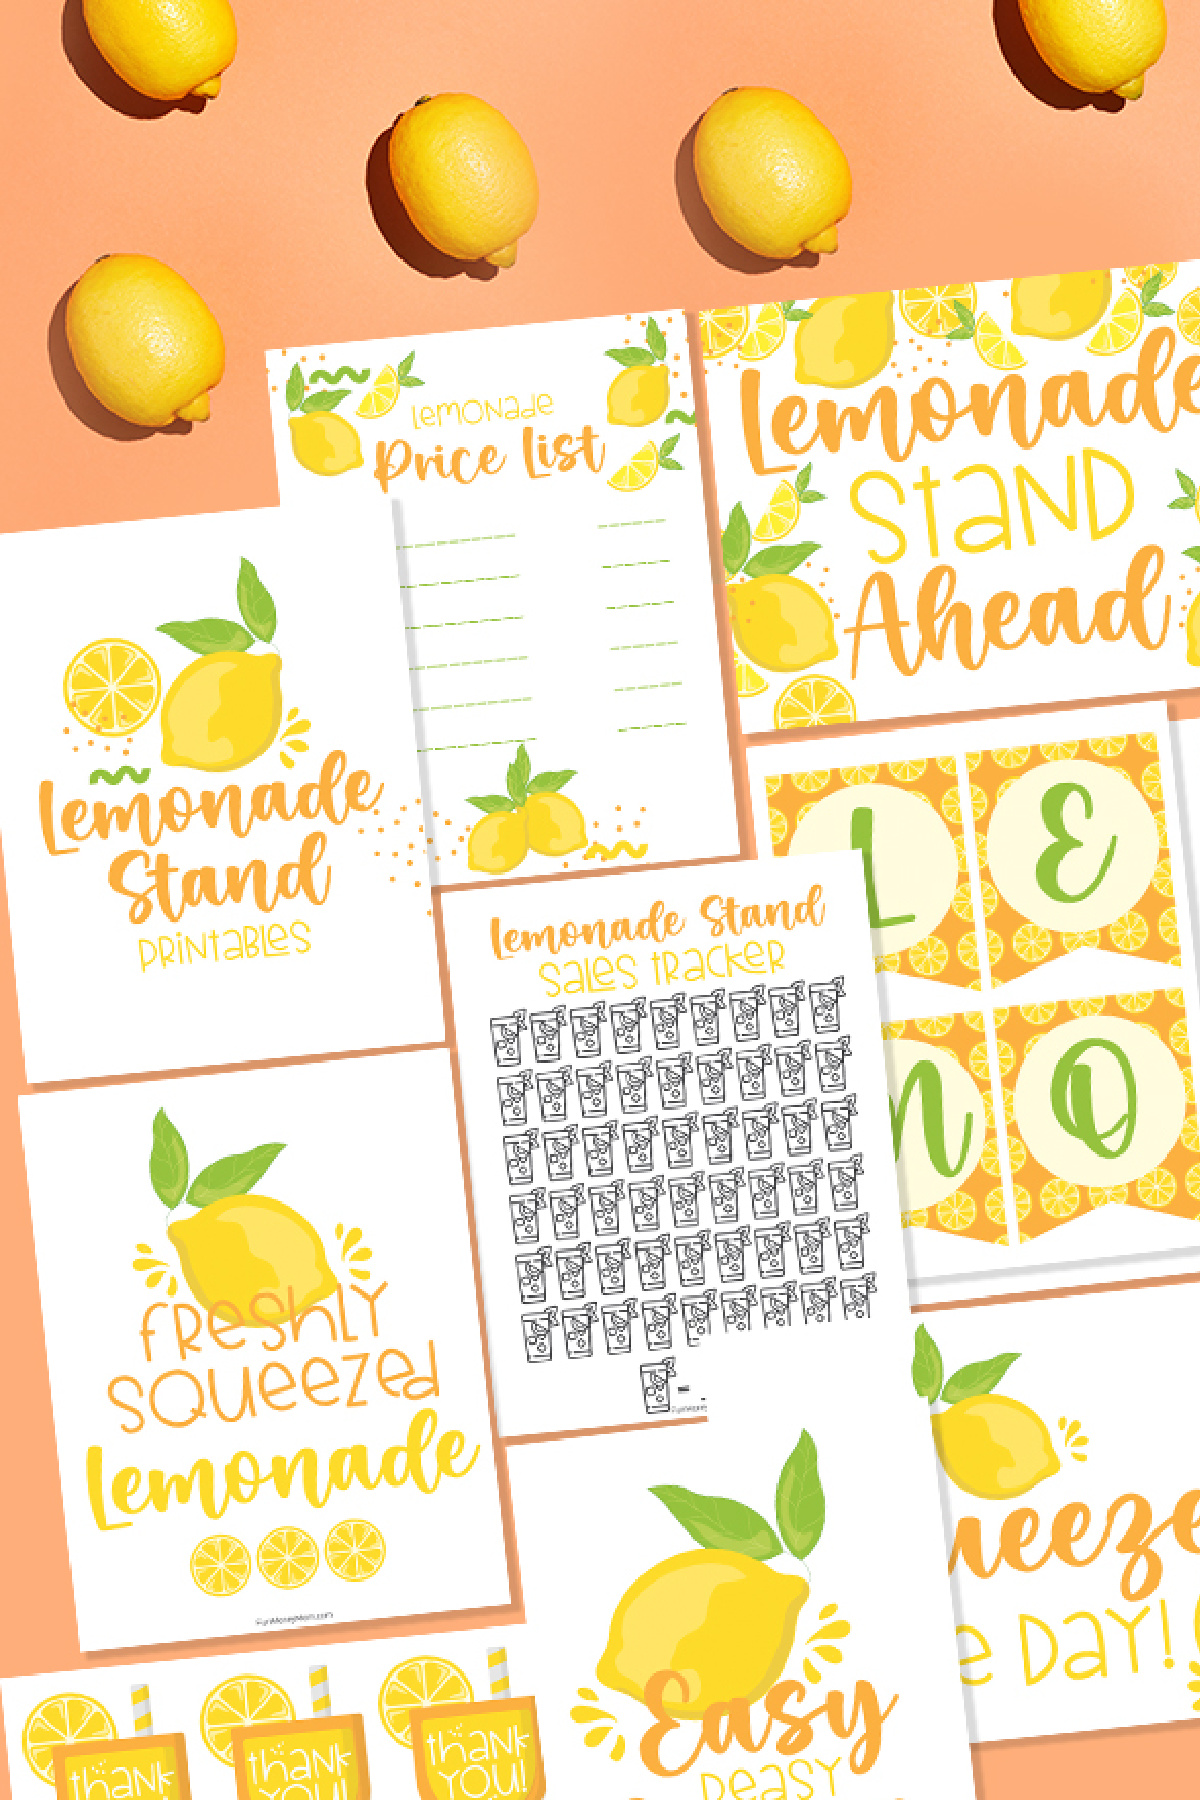 A group of lemonade cards.